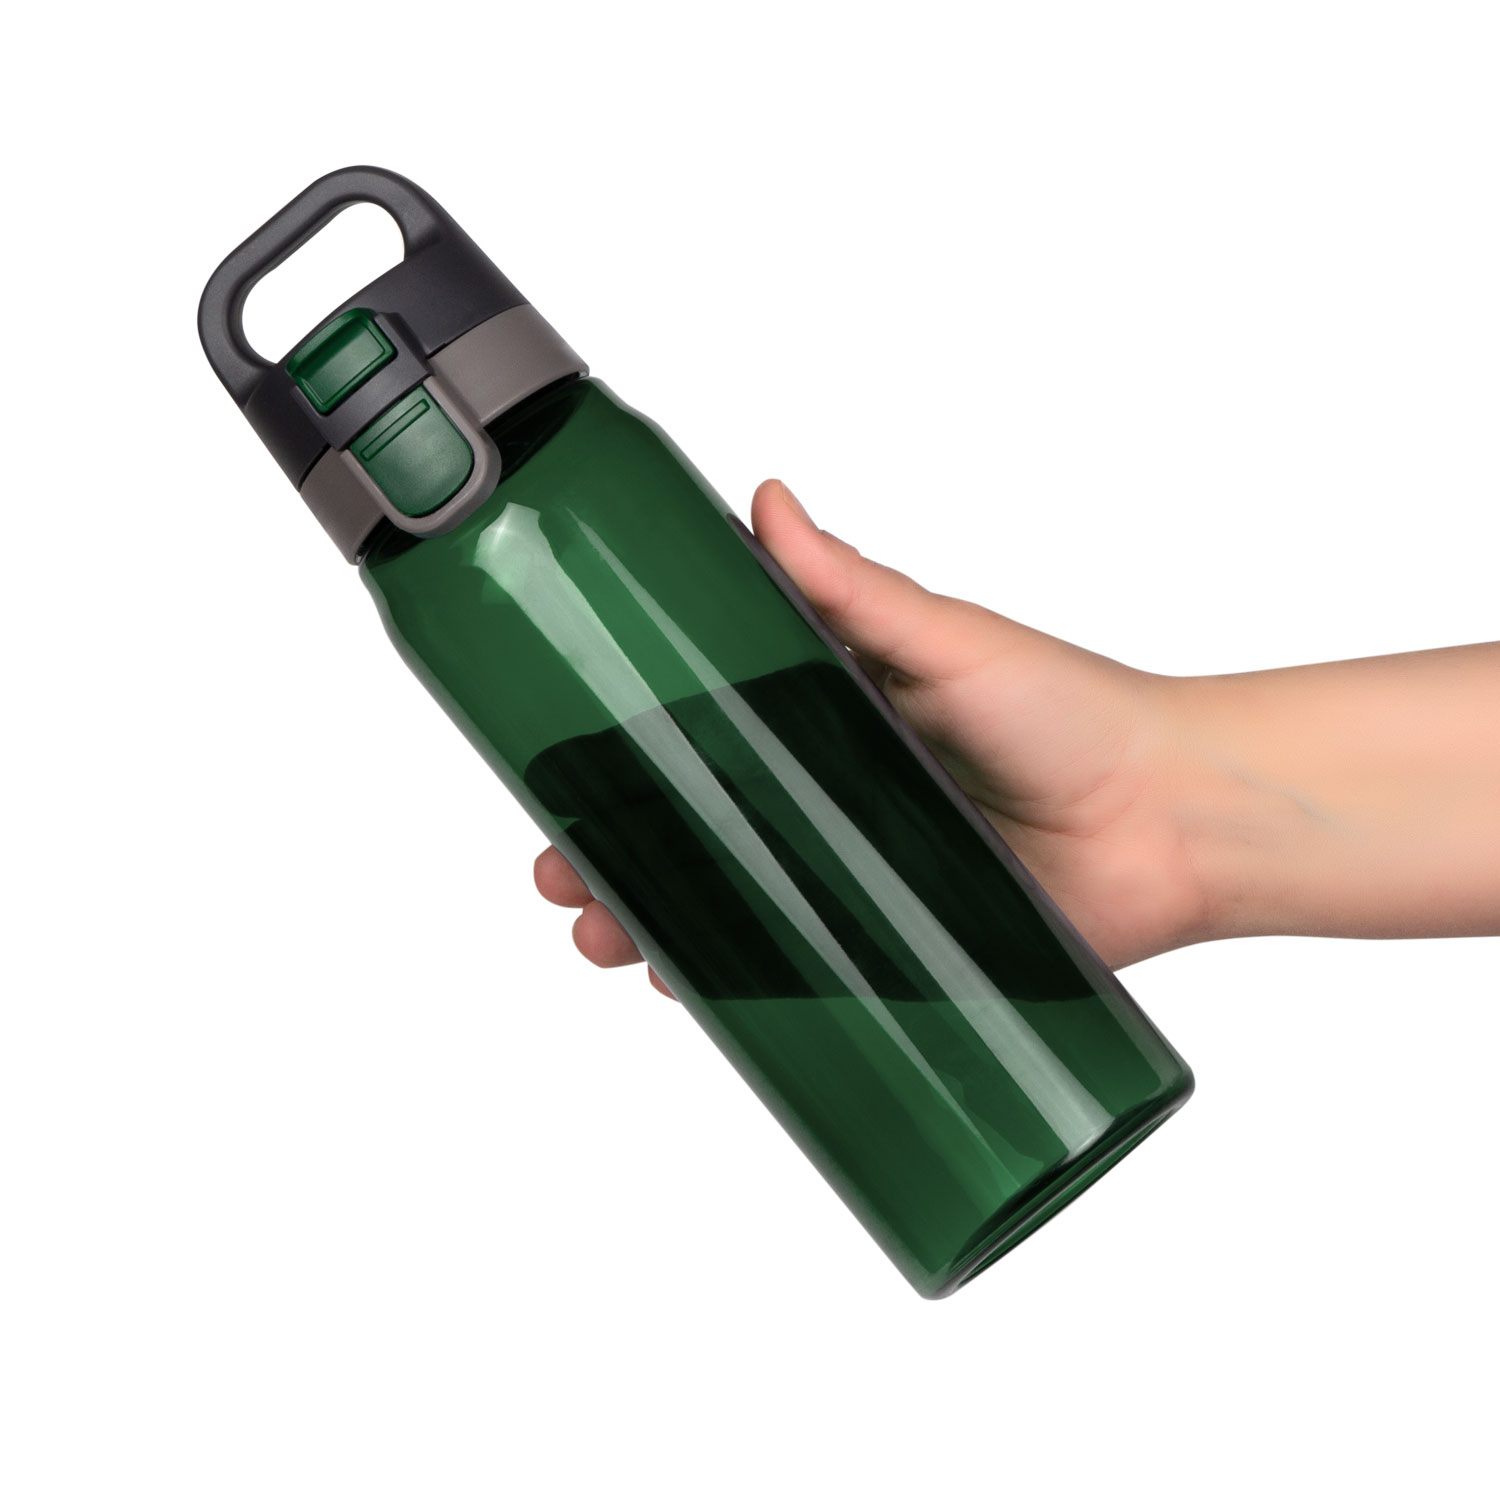 Аква зеленая. Спортивная бутылка для воды, Aqua, 830 ml. Sigg Leaf 600ml Green 8744.10. Спортивная бутылка Portobello 600 мл. Бутылка для воды зеленая спортивная.